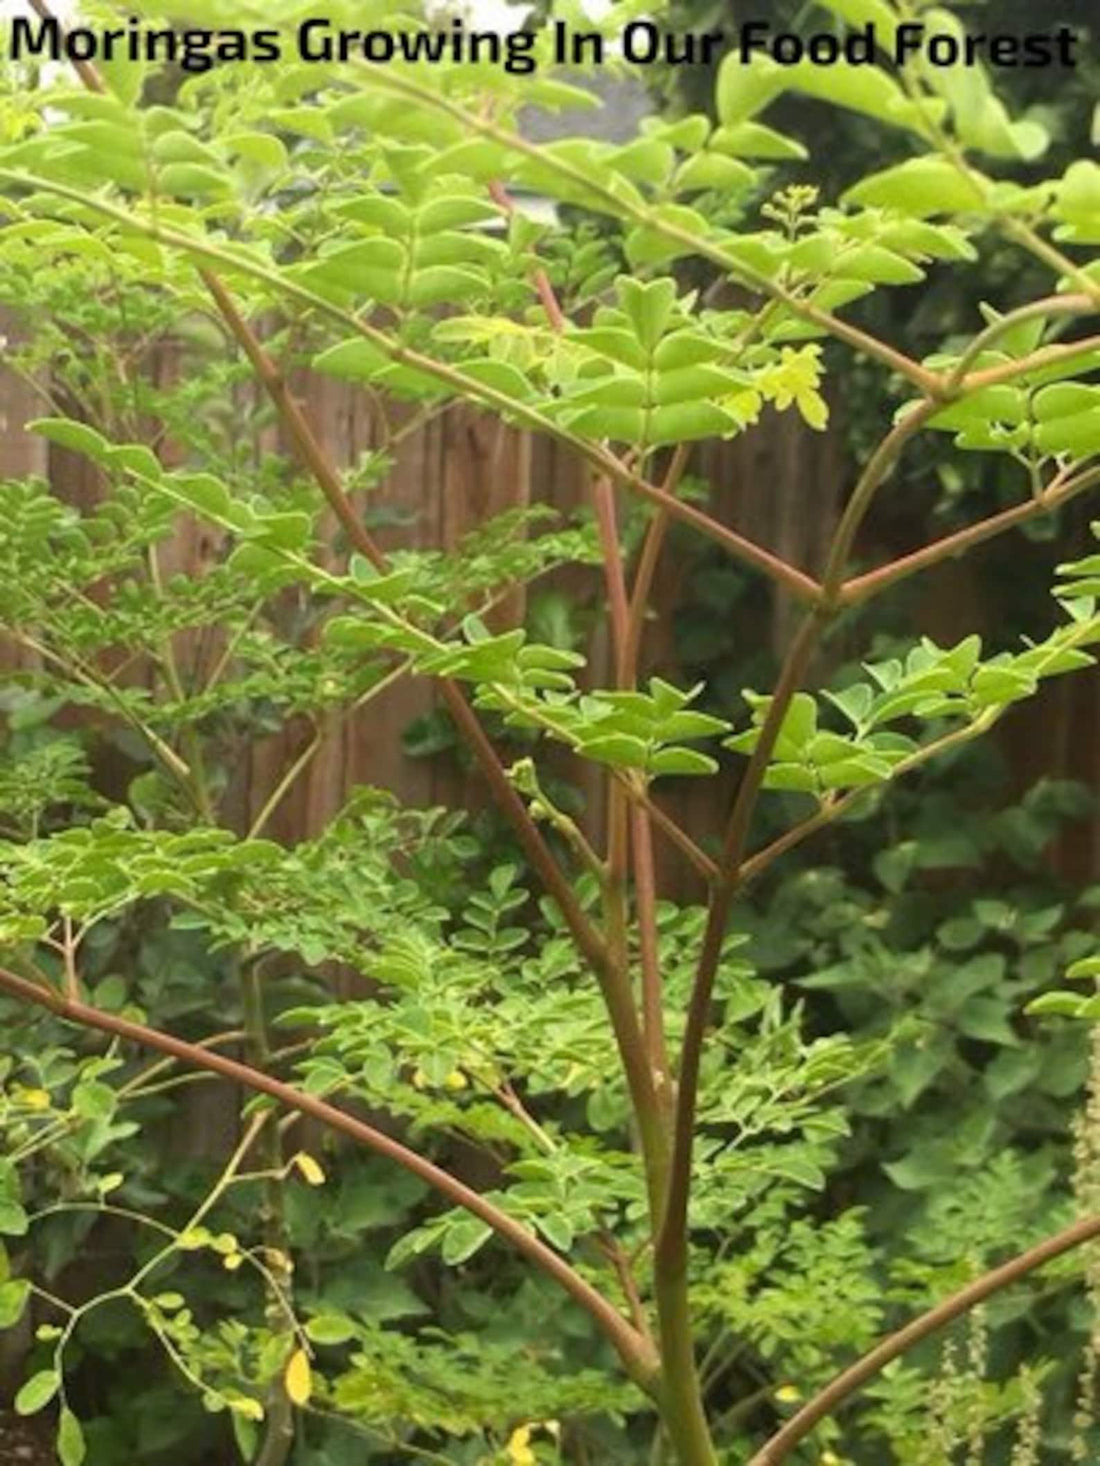 Benefits of Growing Moringa Trees